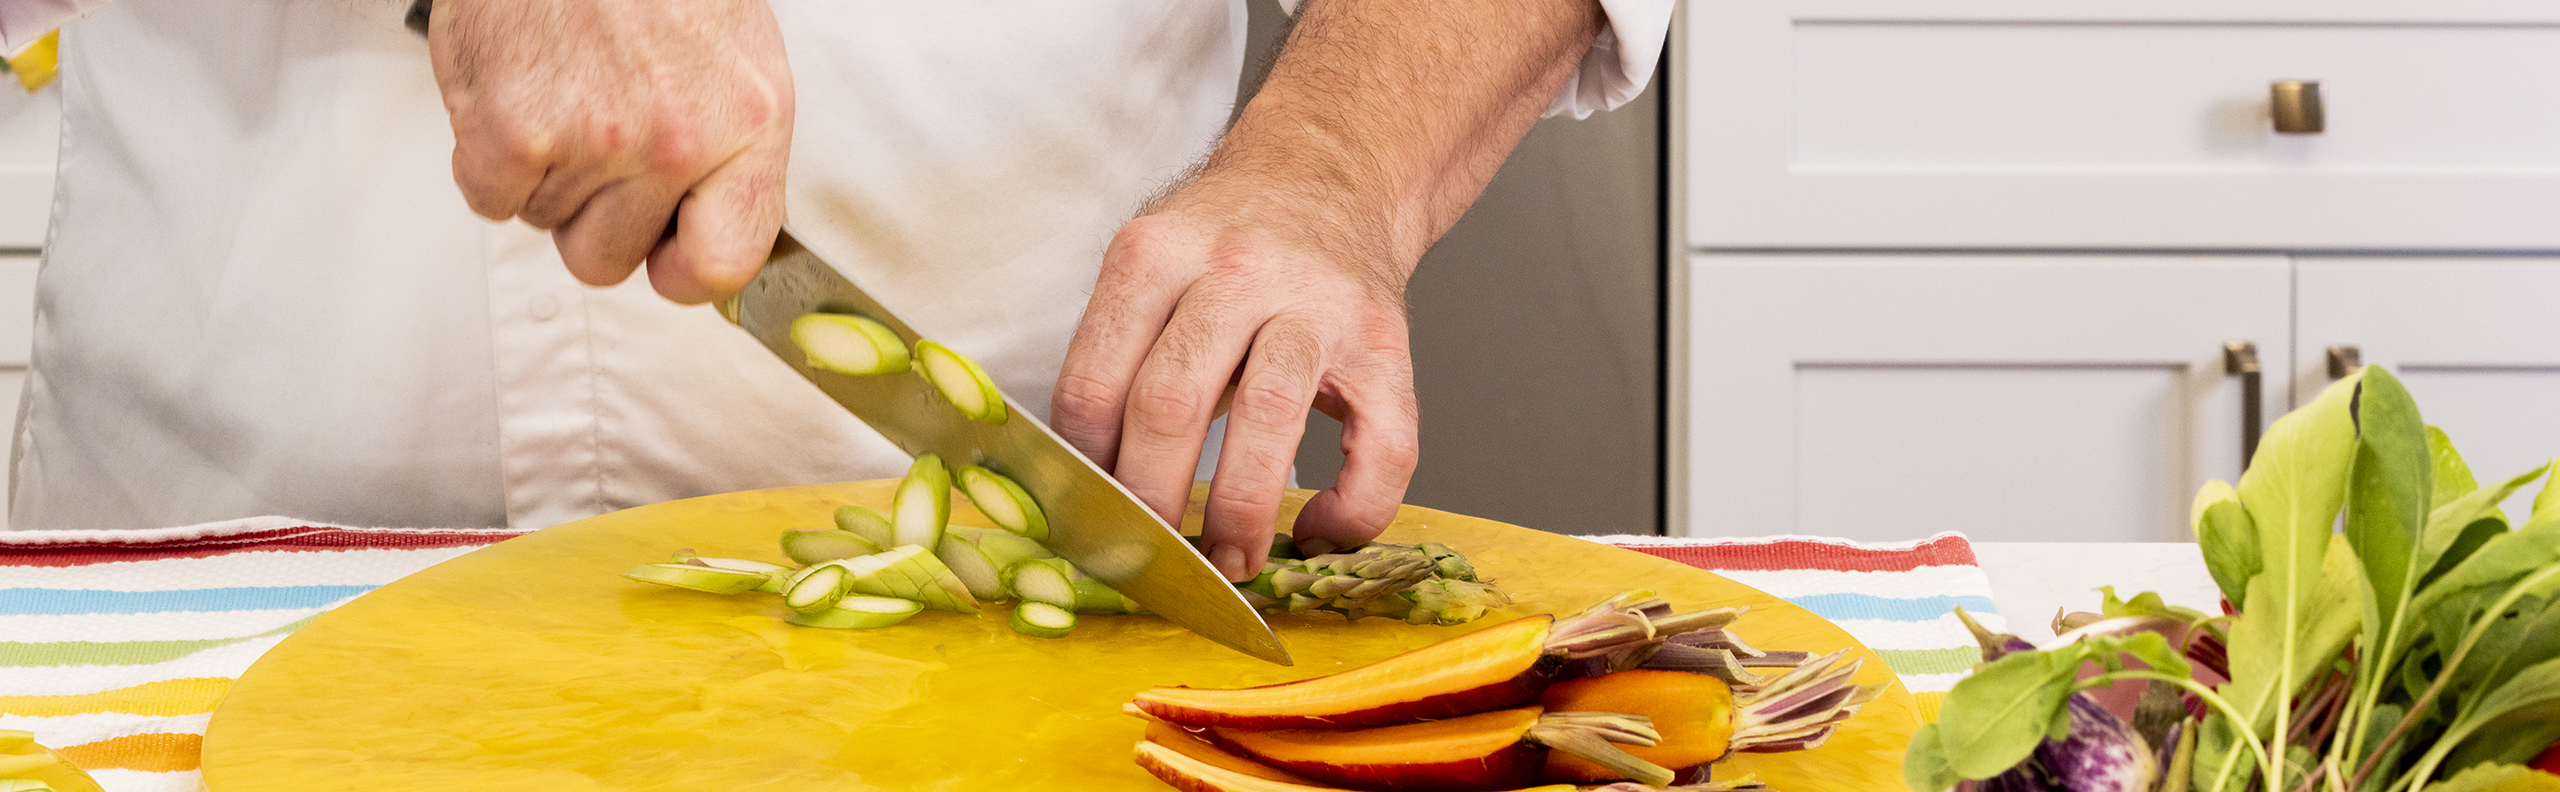 chef chopping veg